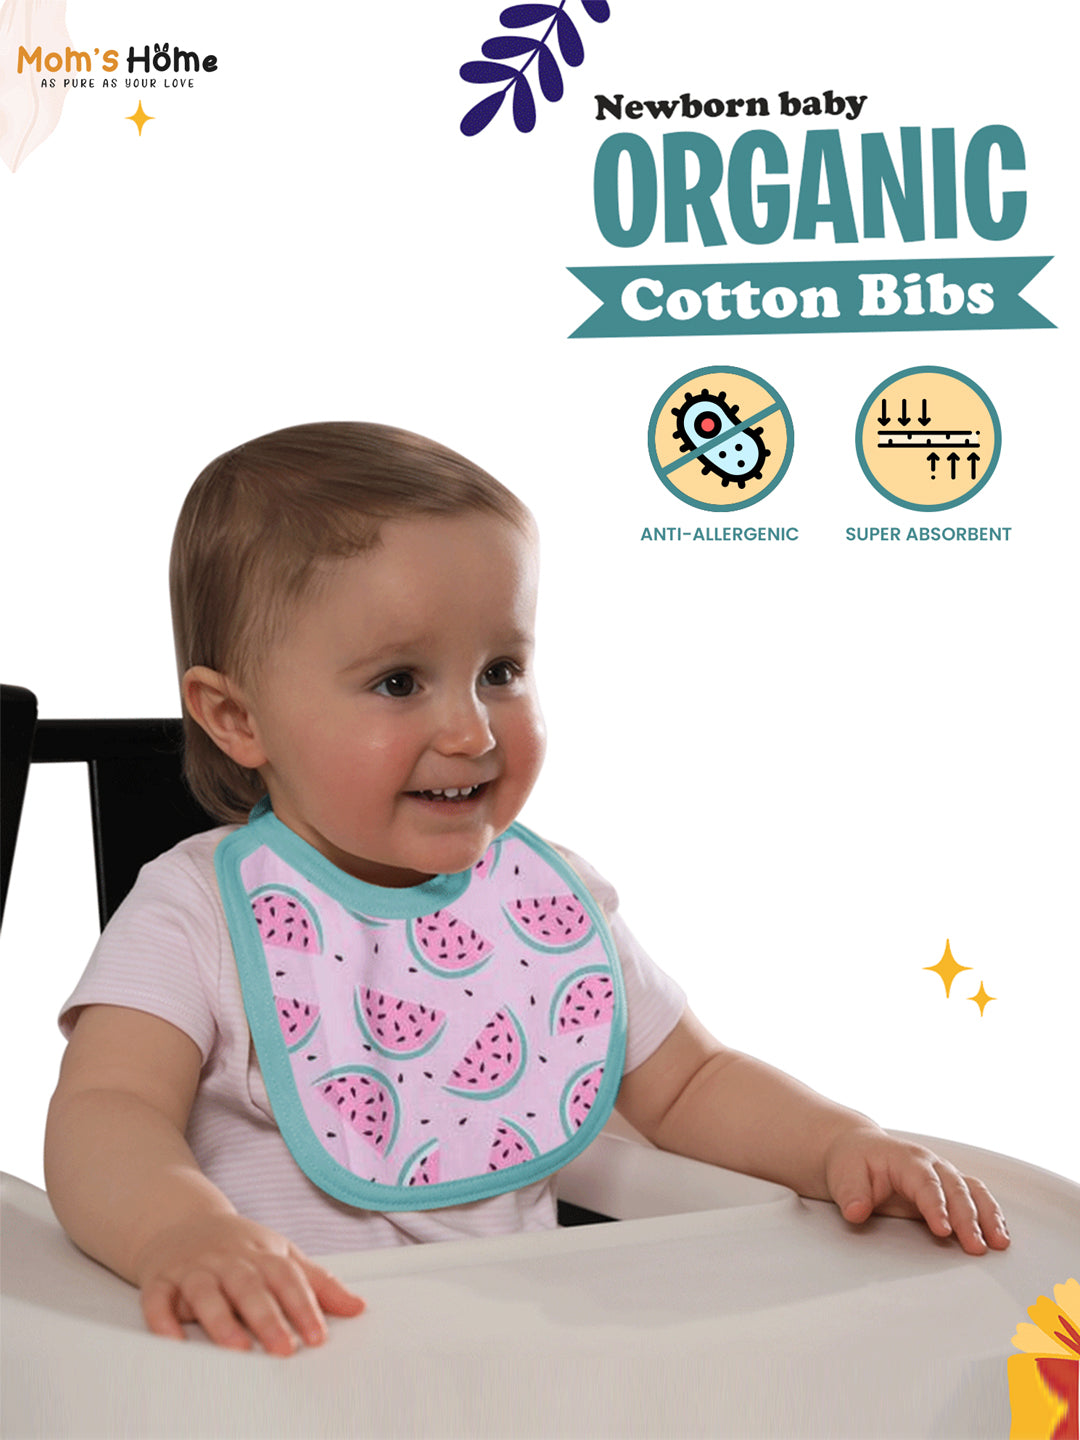 Moms Home Organic Cotton Baby Full Length Winter Romper Gift Set 14 - Yellow